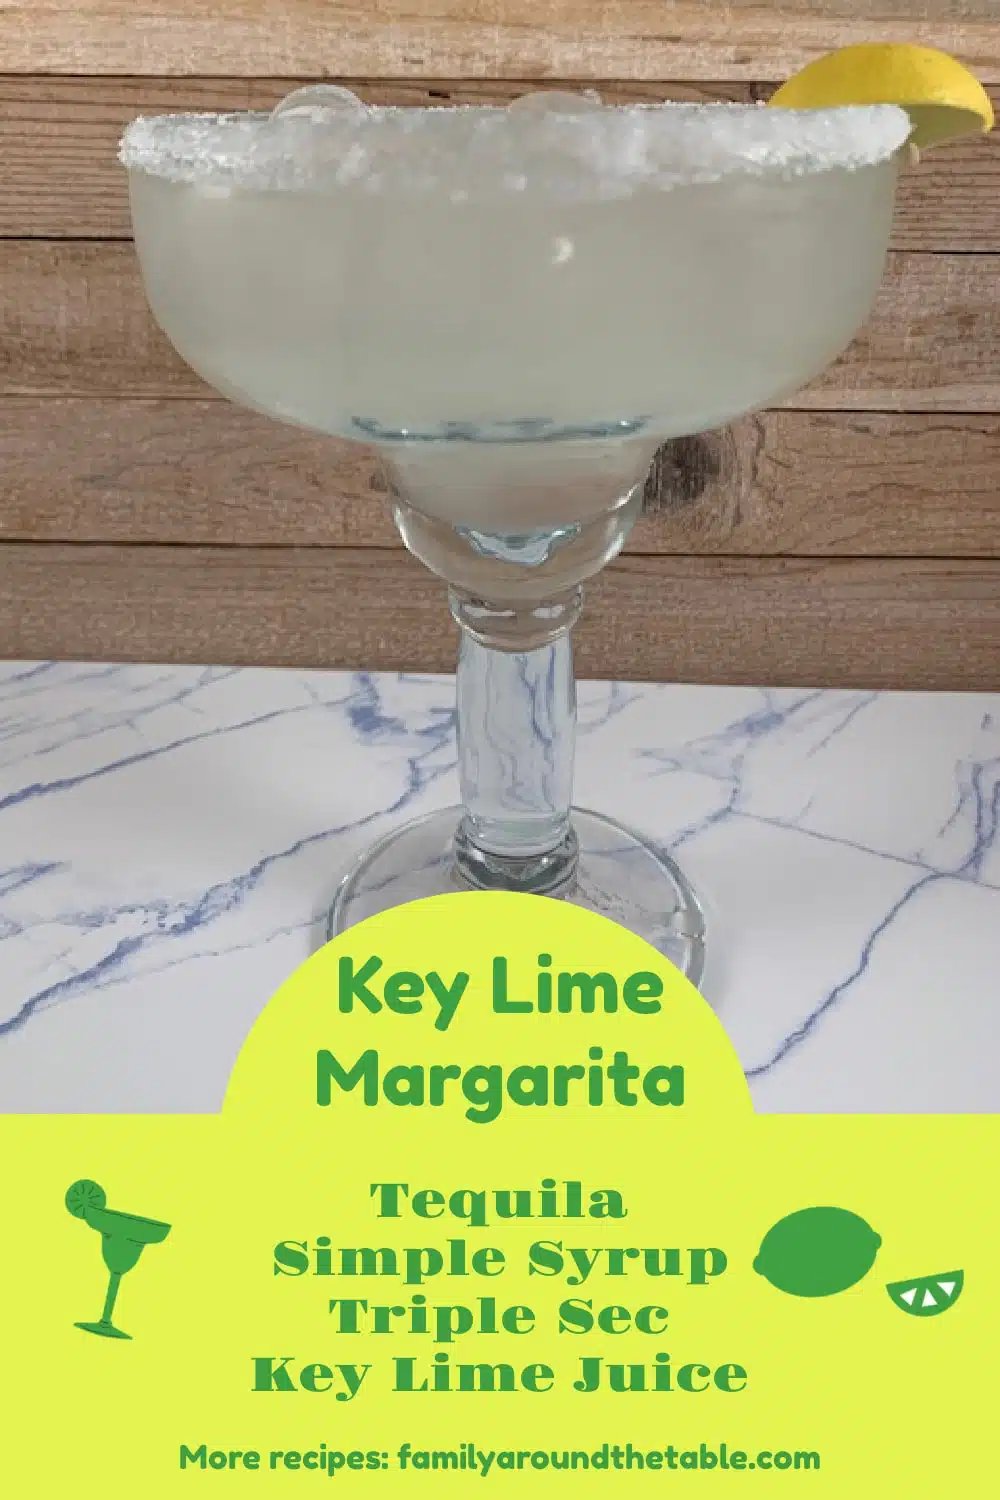 Key Lime Margarita Pinterest image.